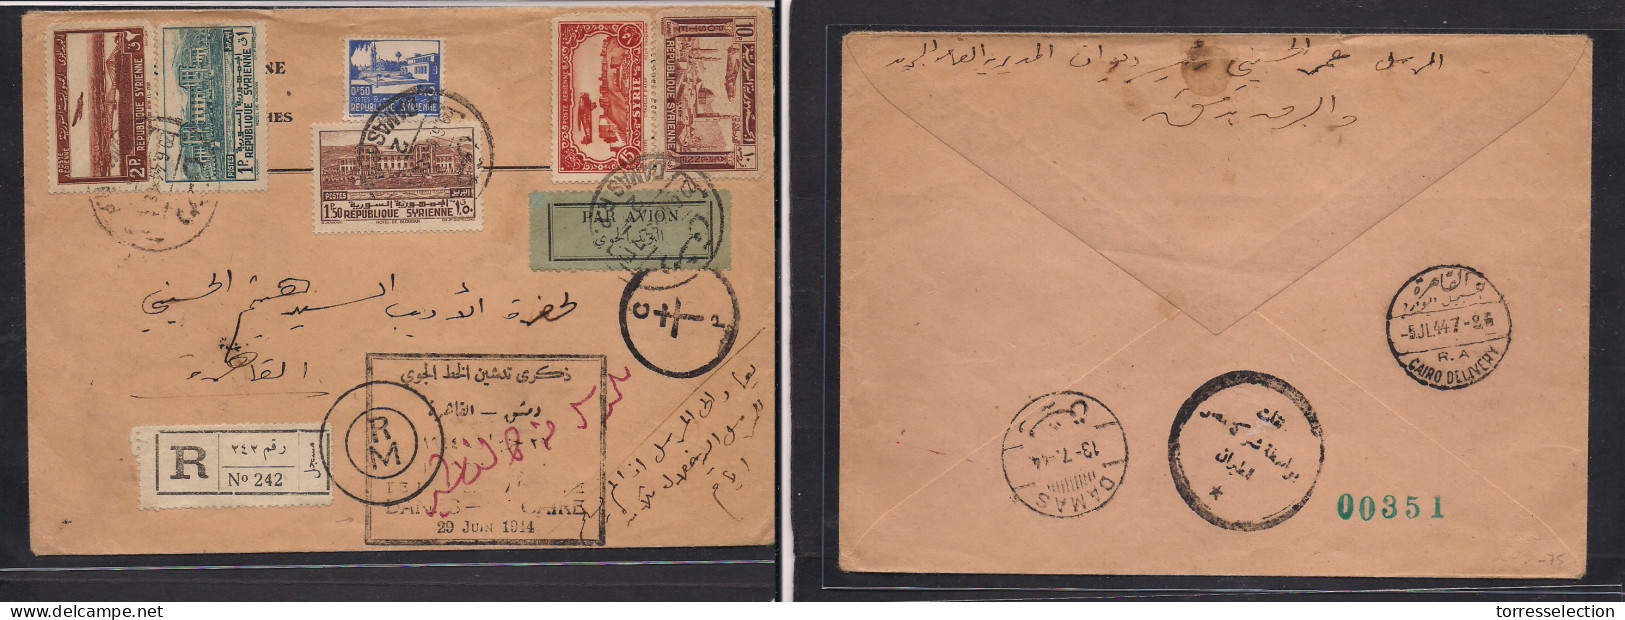 SYRIA. 1944 (29 June) Damas - Cairo (5 July) Registered Air Multifkd Special Flight Cachet Envelope + Censored. 2 Label  - Syrie